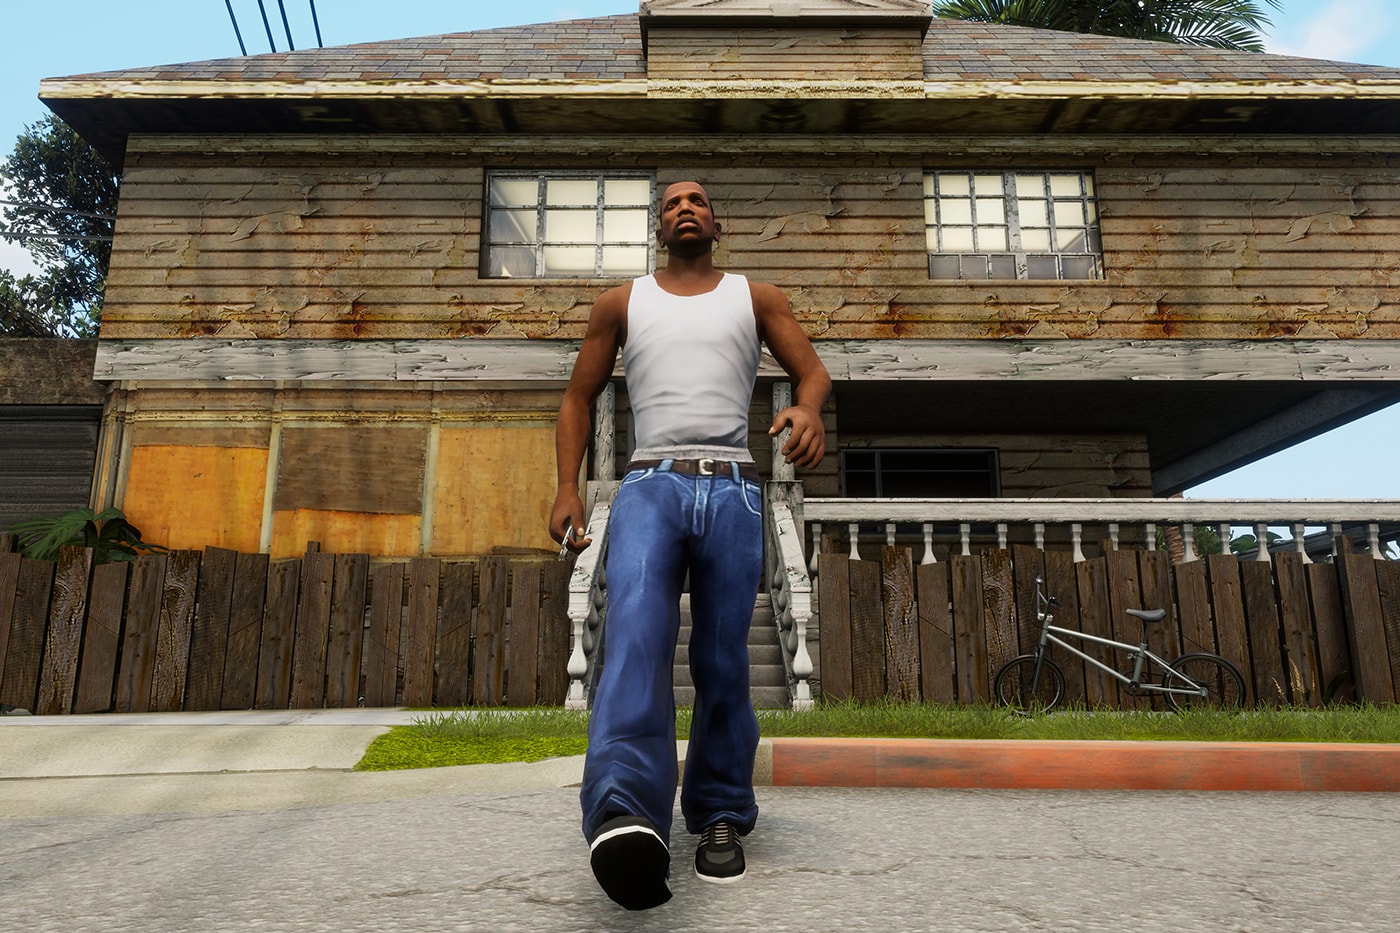 Grand Theft Auto The Trilogy: The Definitive Edition Сравнение скриншотов Видеоматериал Дата выхода Цена покупки Rockstar Games San Andreas Liberty City Vice City III